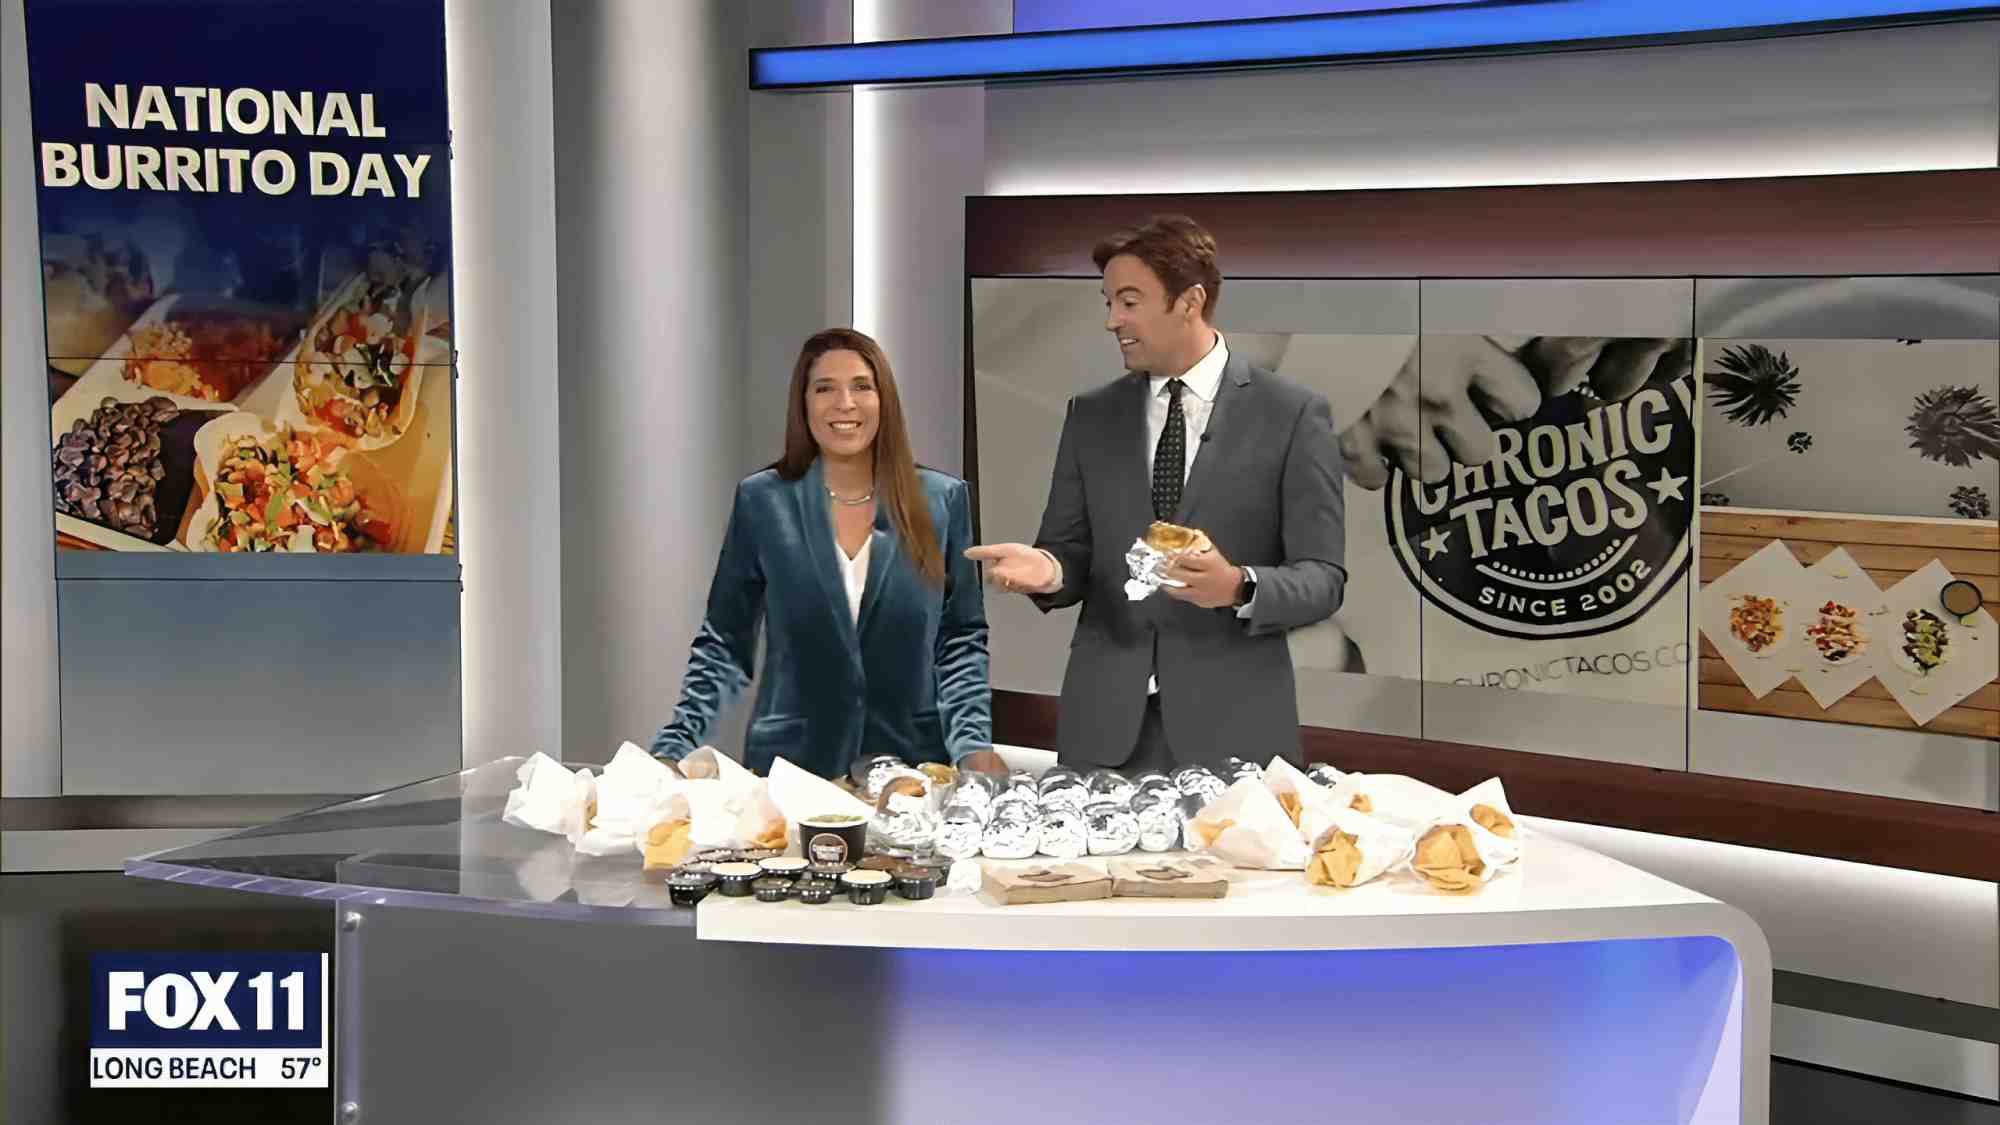 Chronic Tacos: National Burrito Day on Fox 11 News!